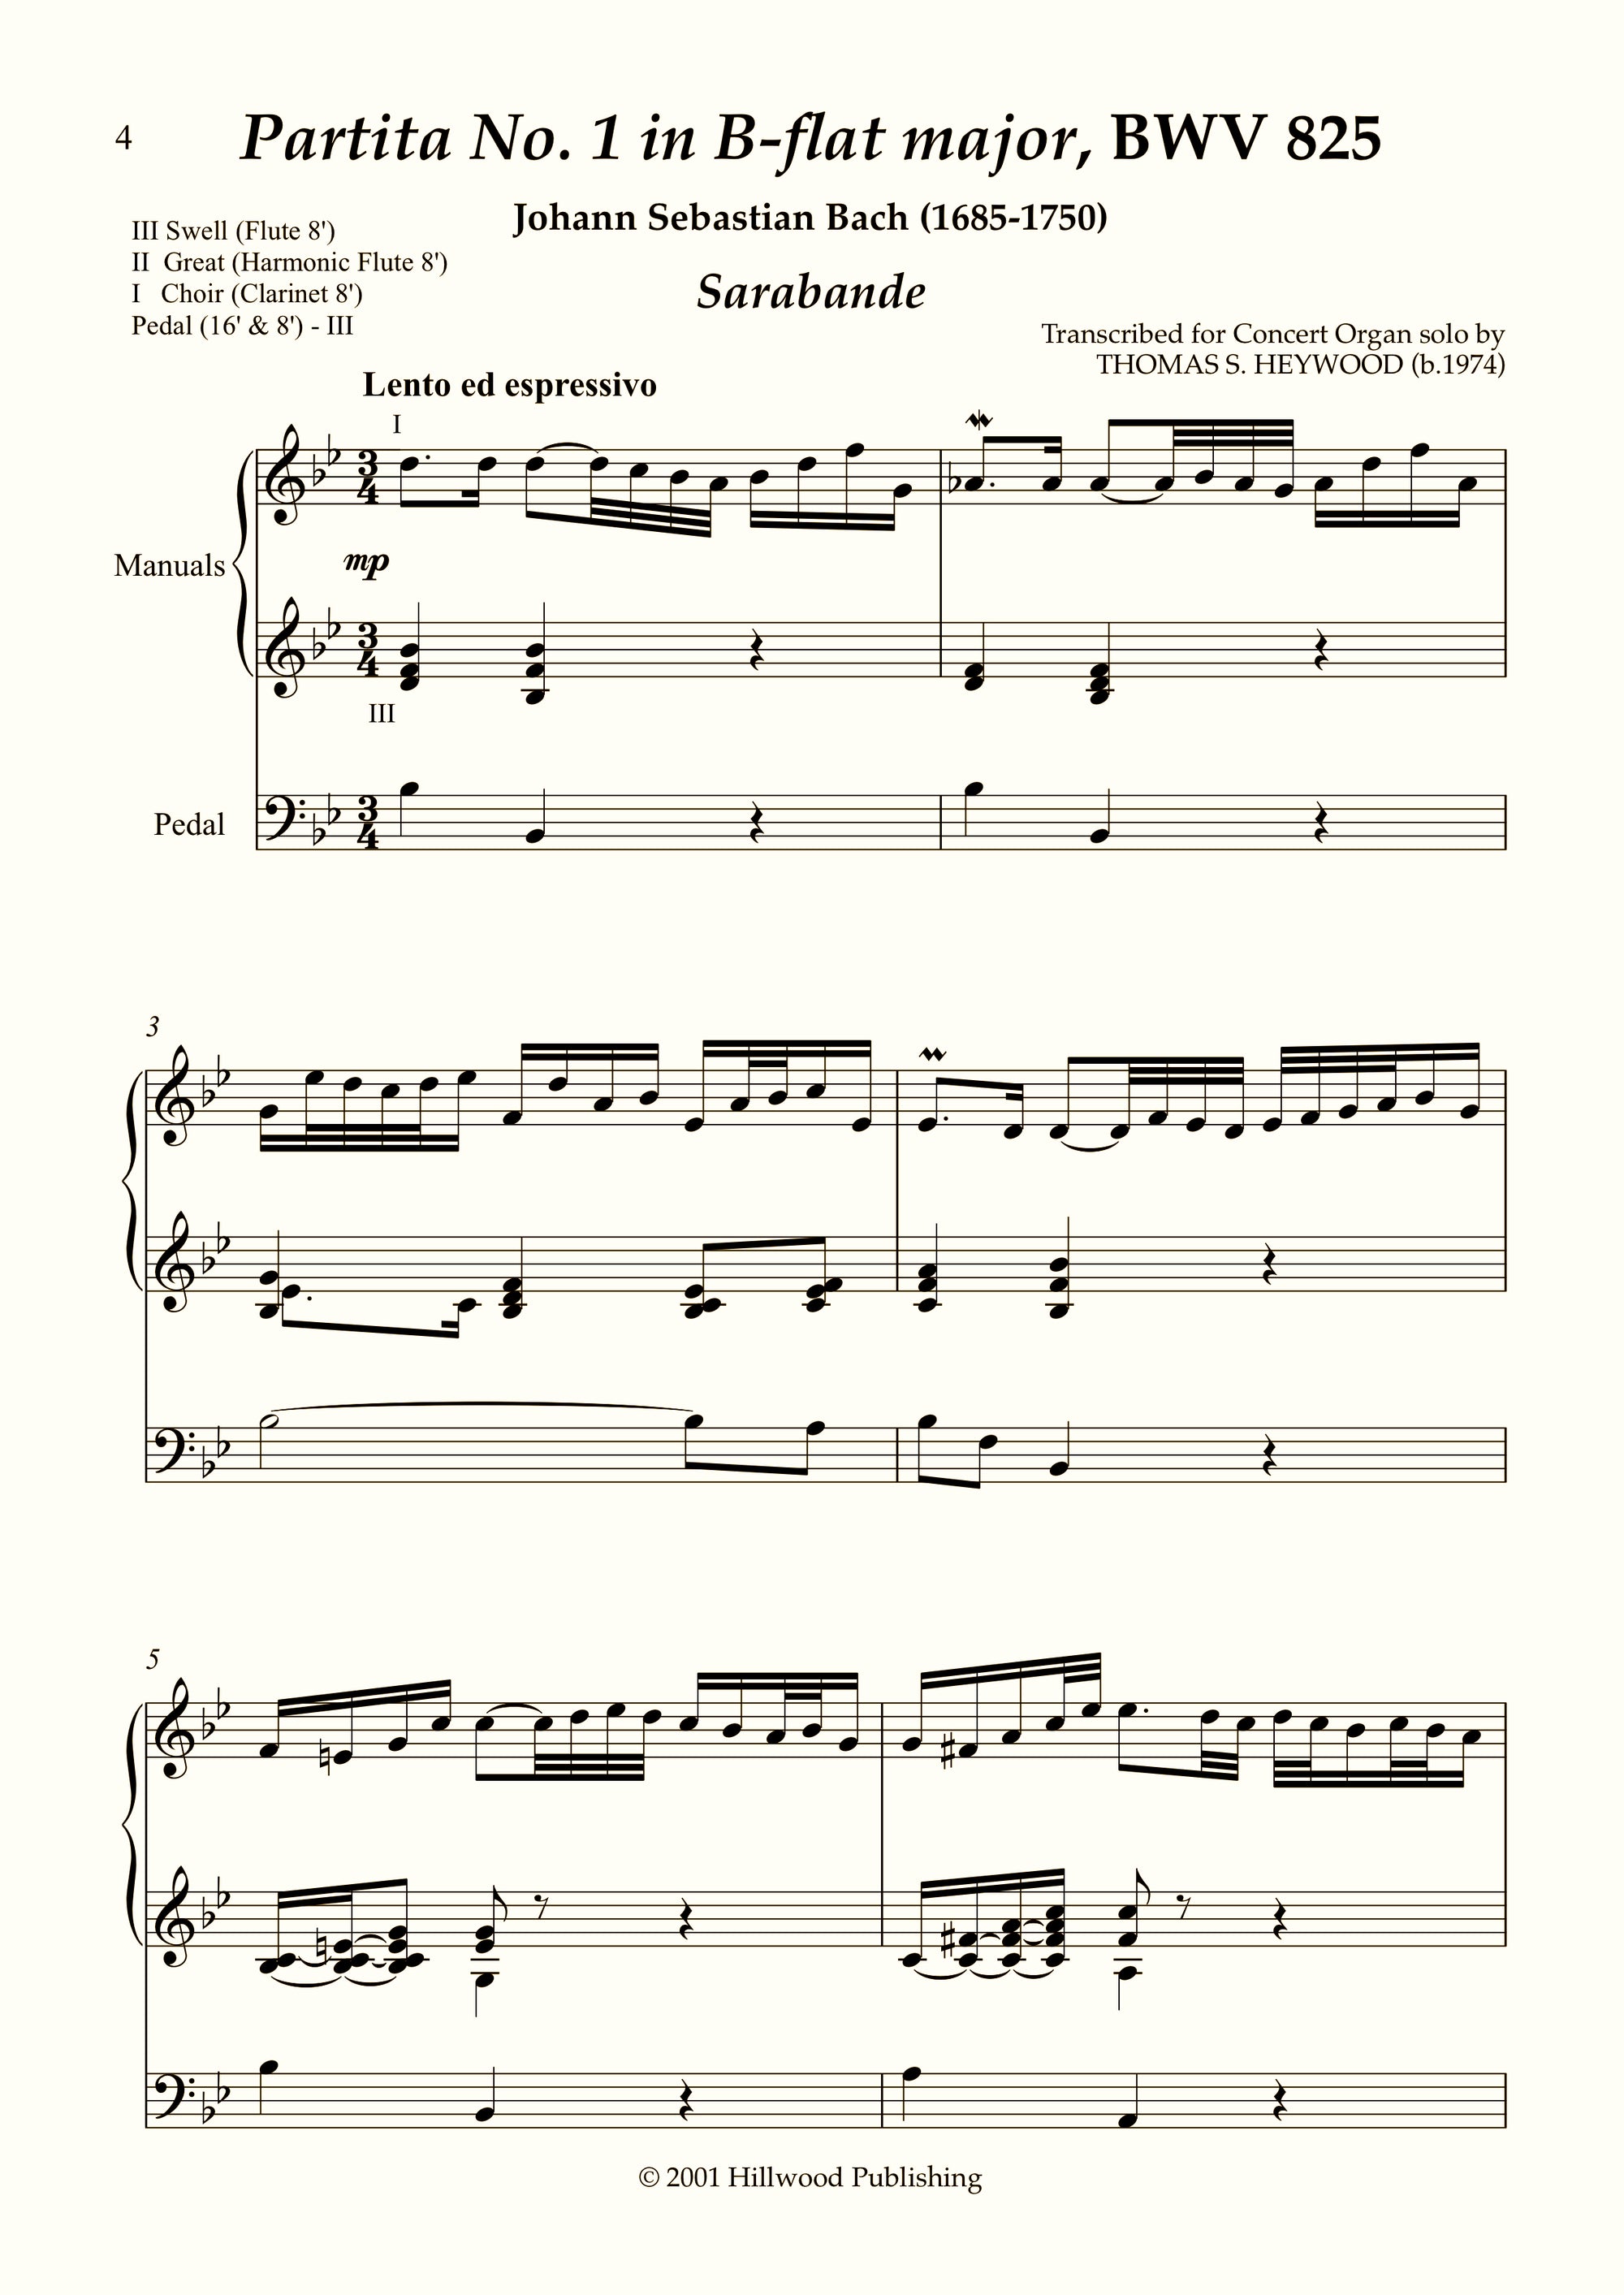 Bach/Heywood - Sarabande from Partita No. 1 in B-flat major, BWV 825 (Score) | Thomas Heywood | Concert Organ International